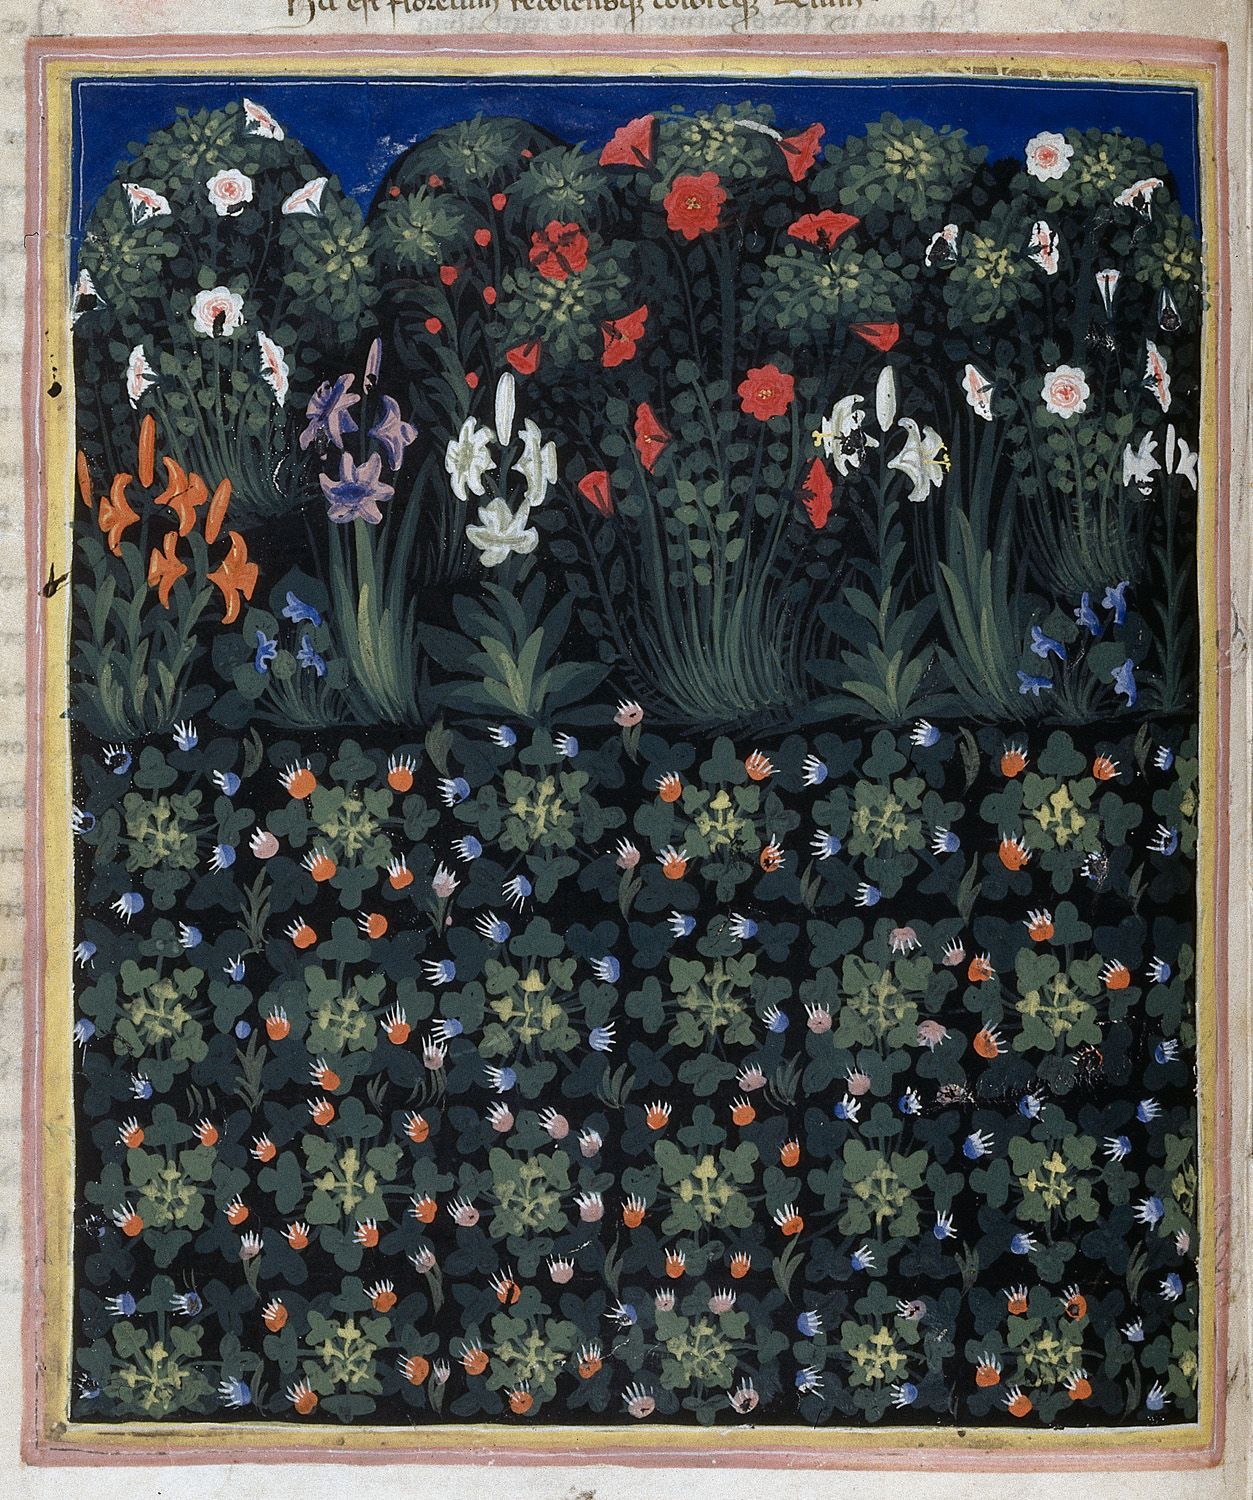 Bahçe by Pacino di Buonaguida - 1335-1340 - 49 x 35 cm 